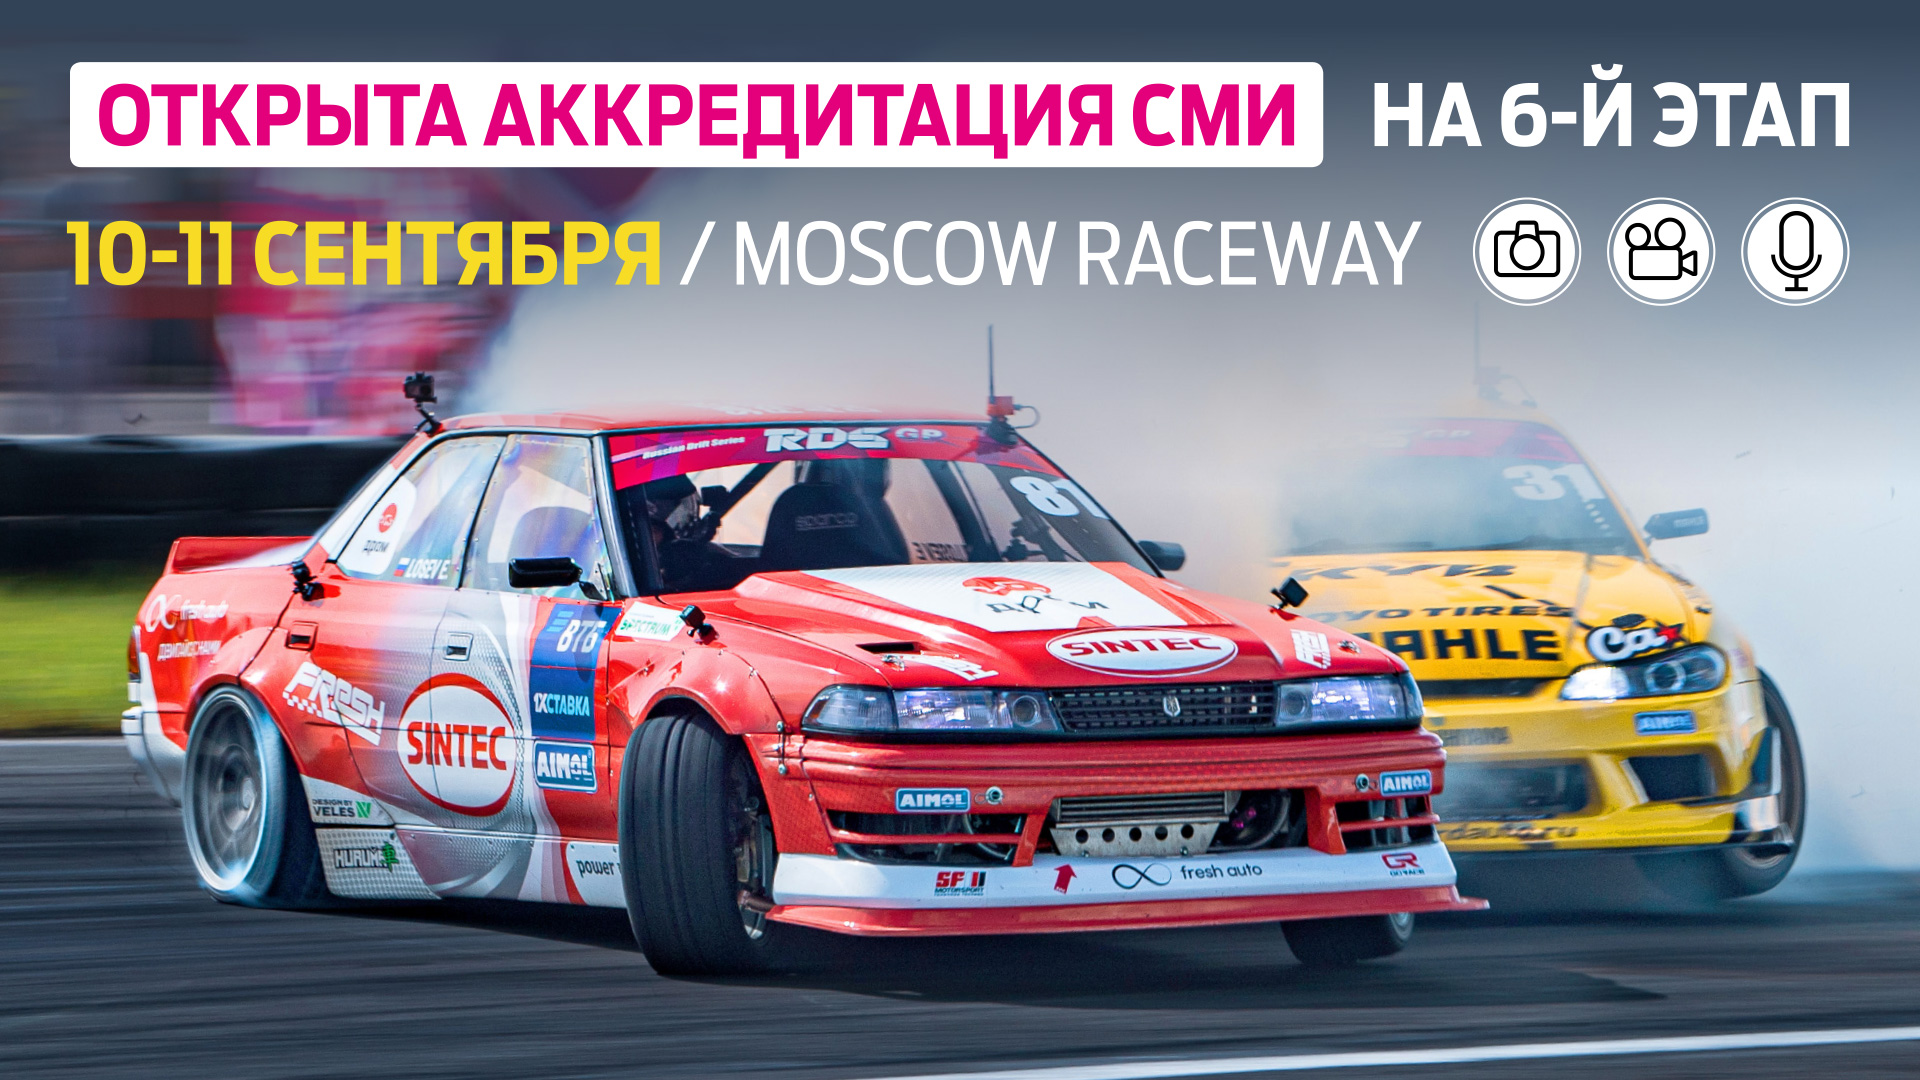 Открыта аккредитация СМИ на 6 этап RDS GP на Moscow Raceway